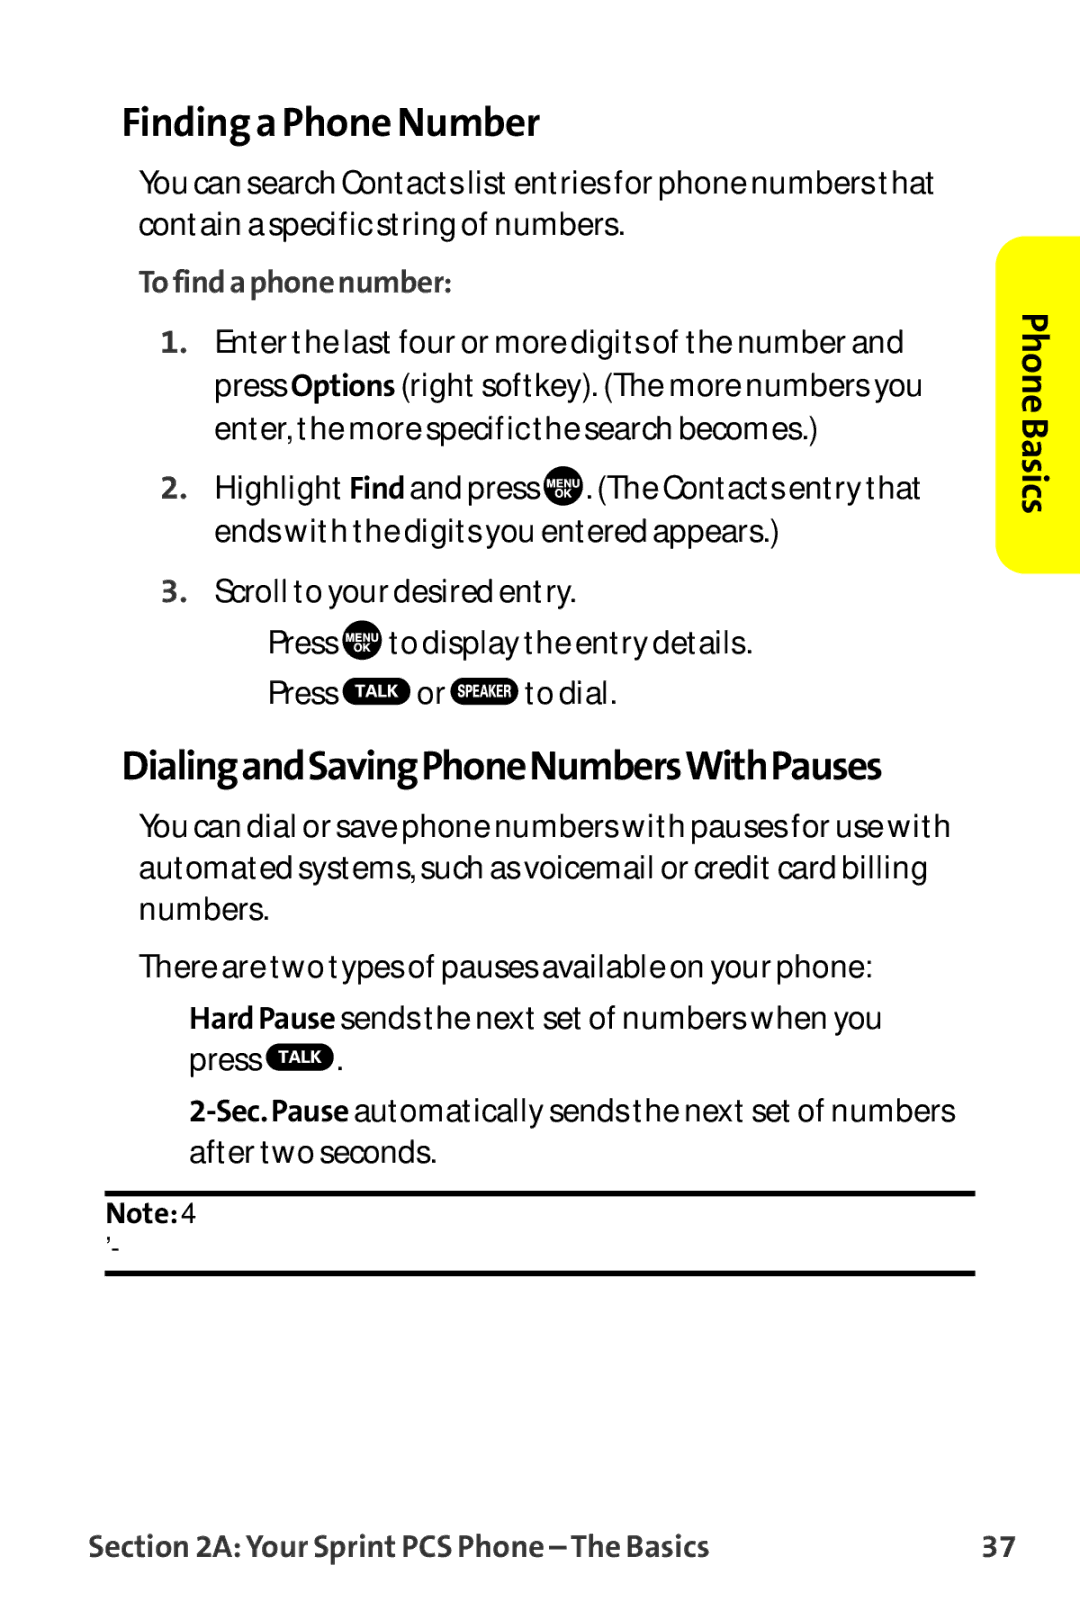 Sanyo MM-9000 manual Findinga Phone Number, DialingandSavingPhoneNumbersWithPauses, Tofindaphonenumber 